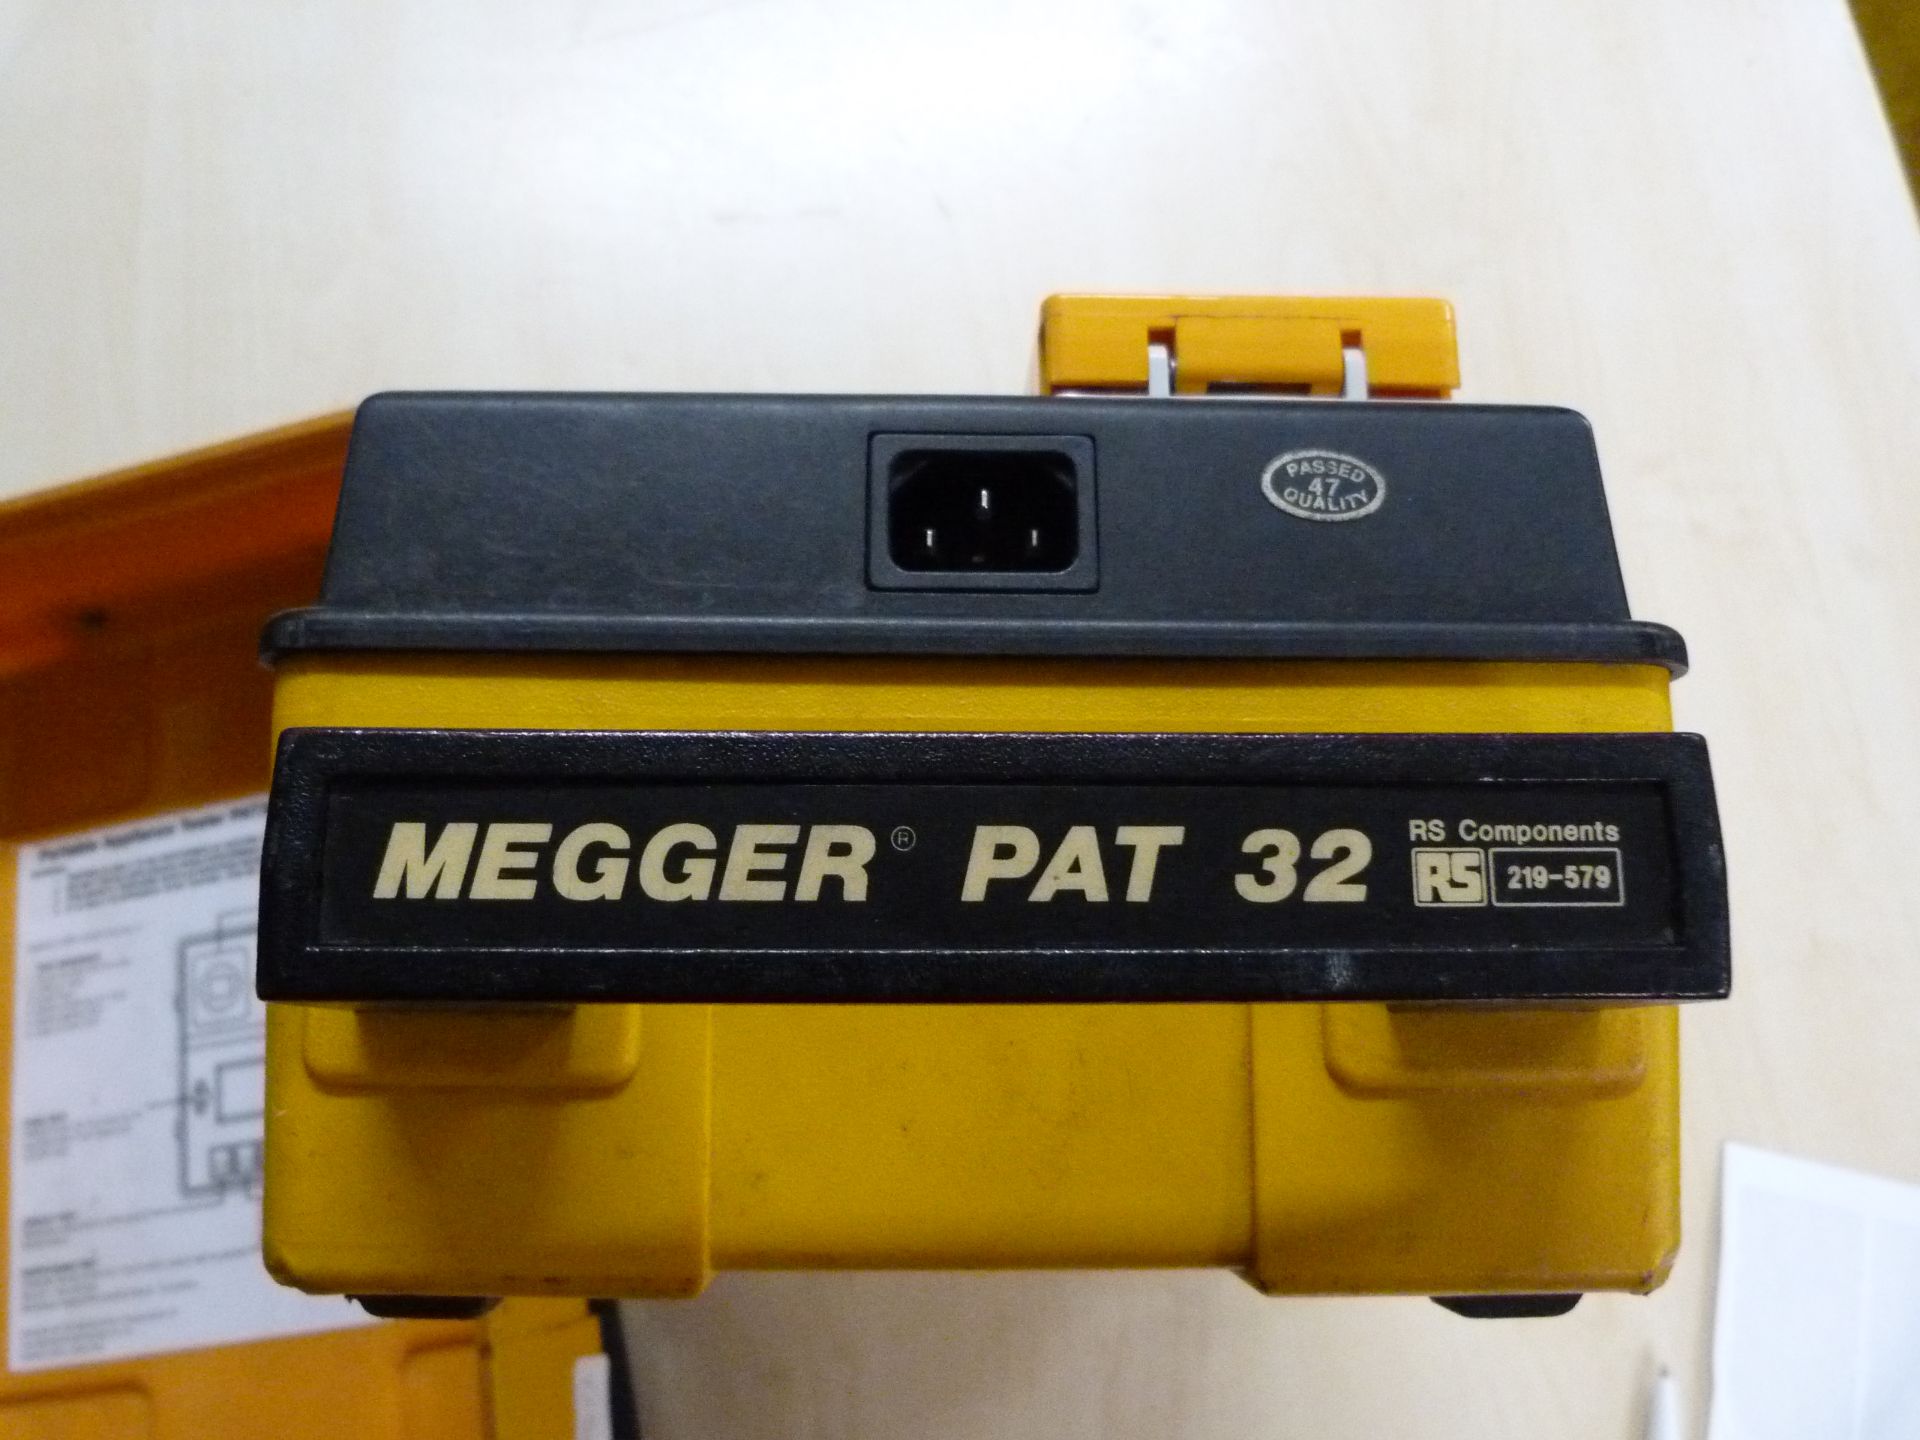 *Megger PAT 32 Portable Appliance Tester 219-579 - Image 2 of 2